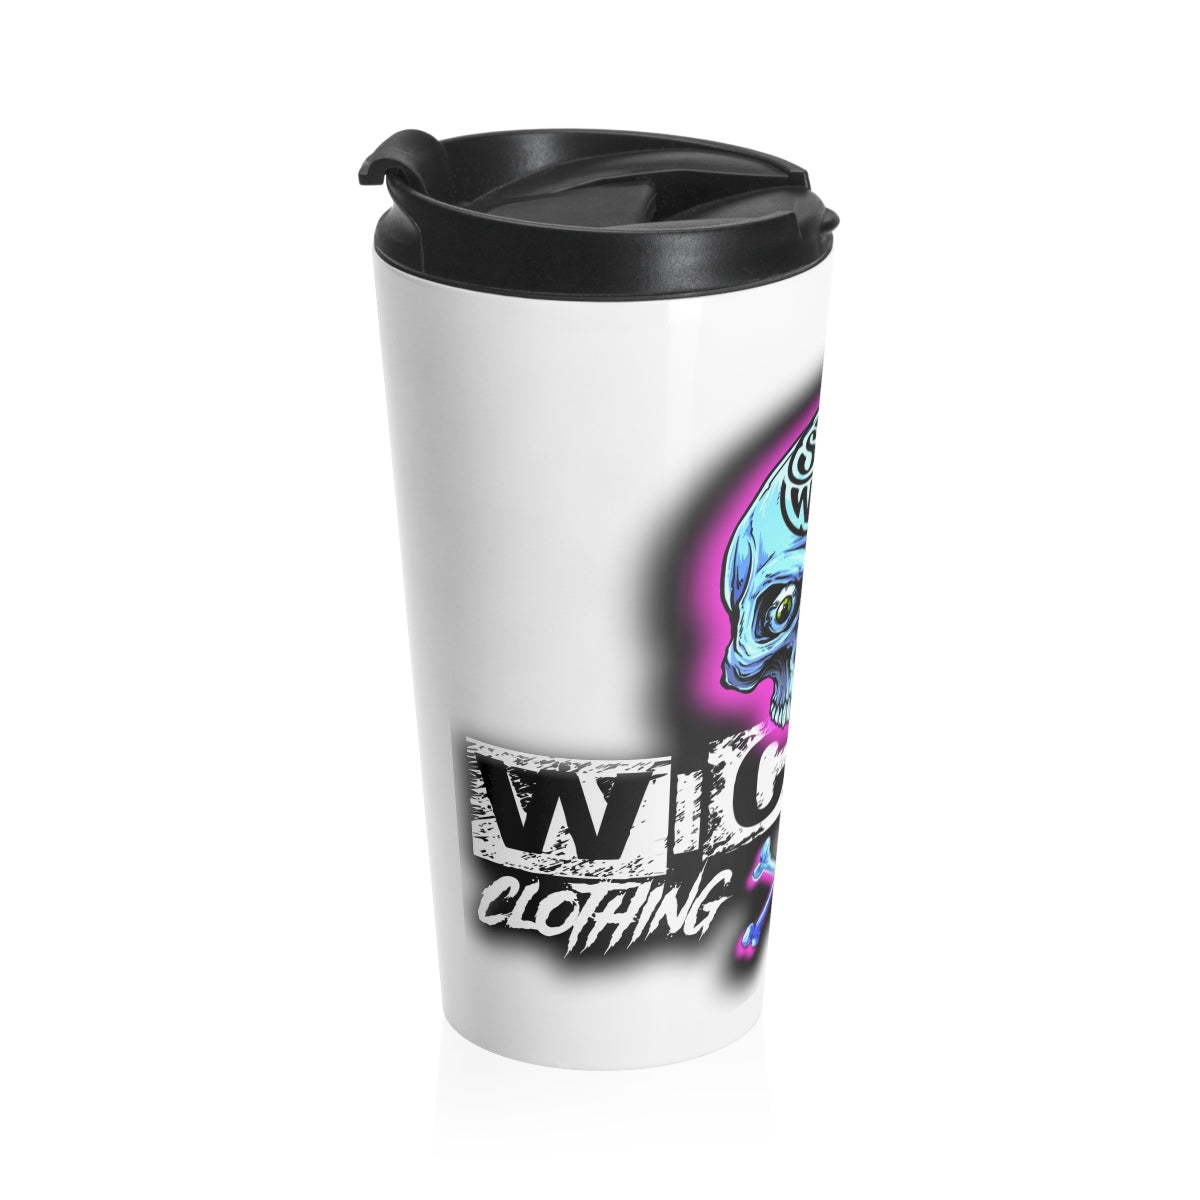 Stay Wild 1/ White/Stainless Steel Travel Mug